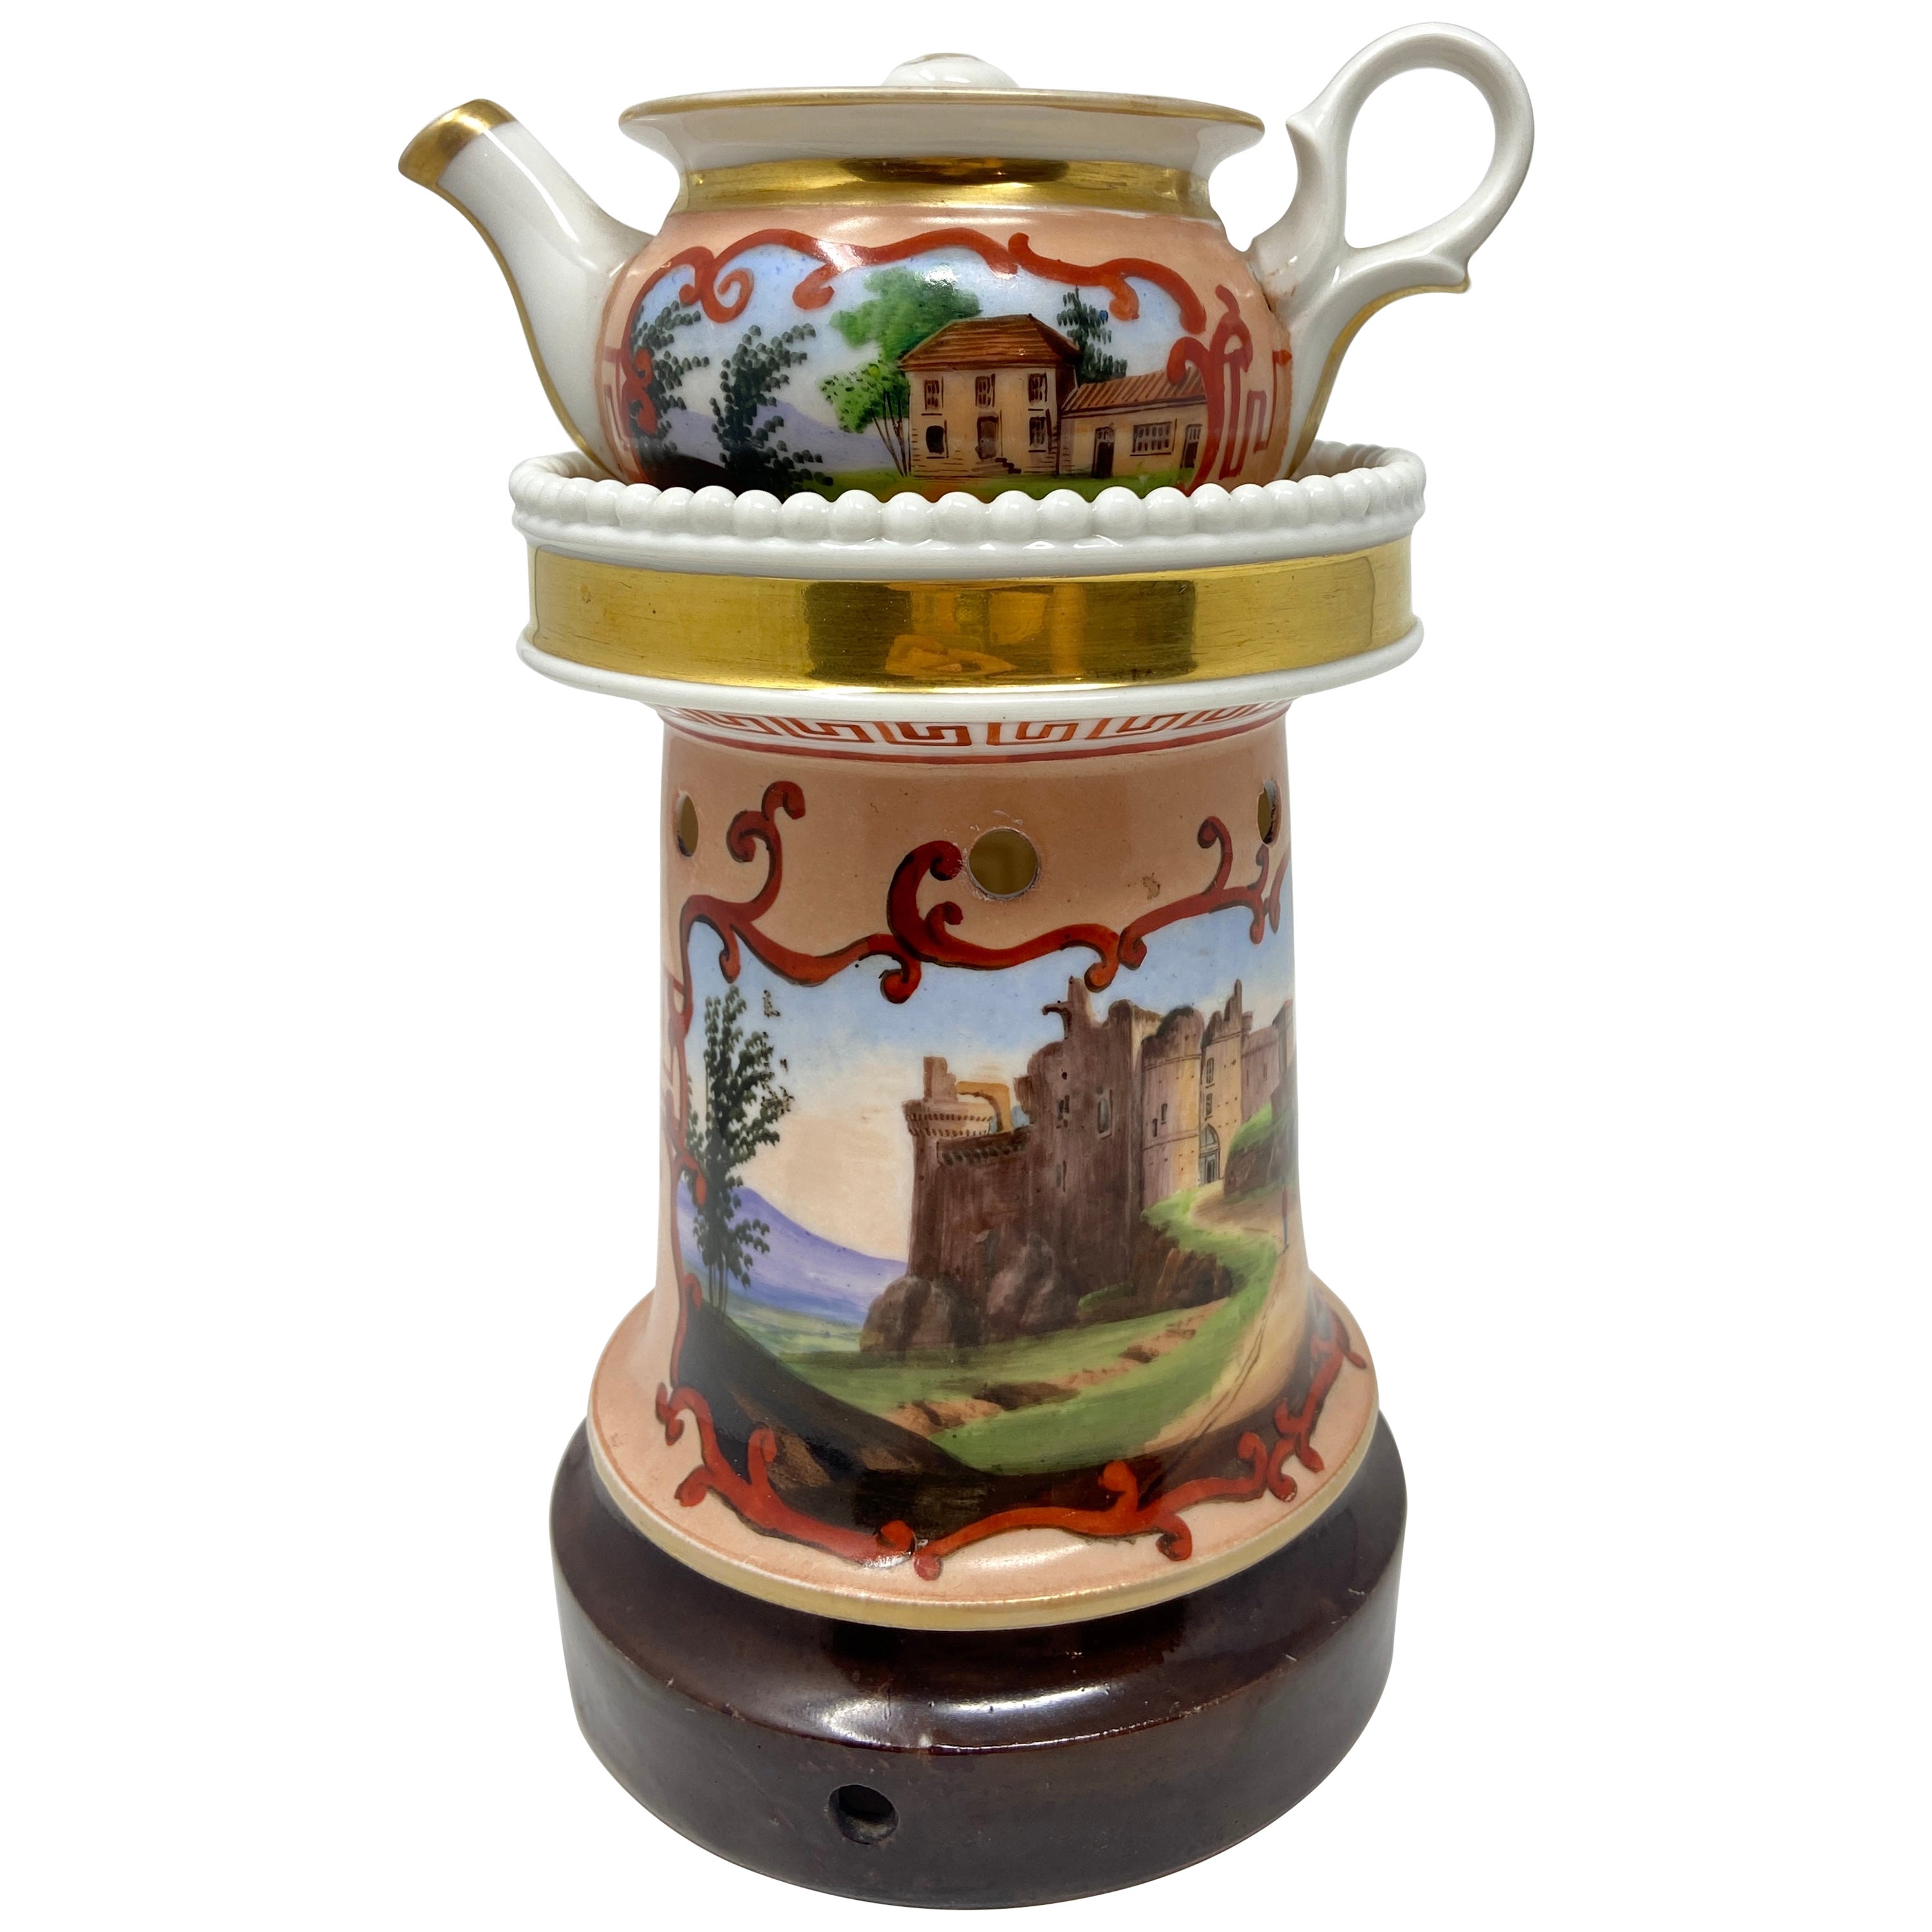 Antique French Porcelain "Veilleuse" or Tea Warmer Night Light, Circa 1880-1890 For Sale